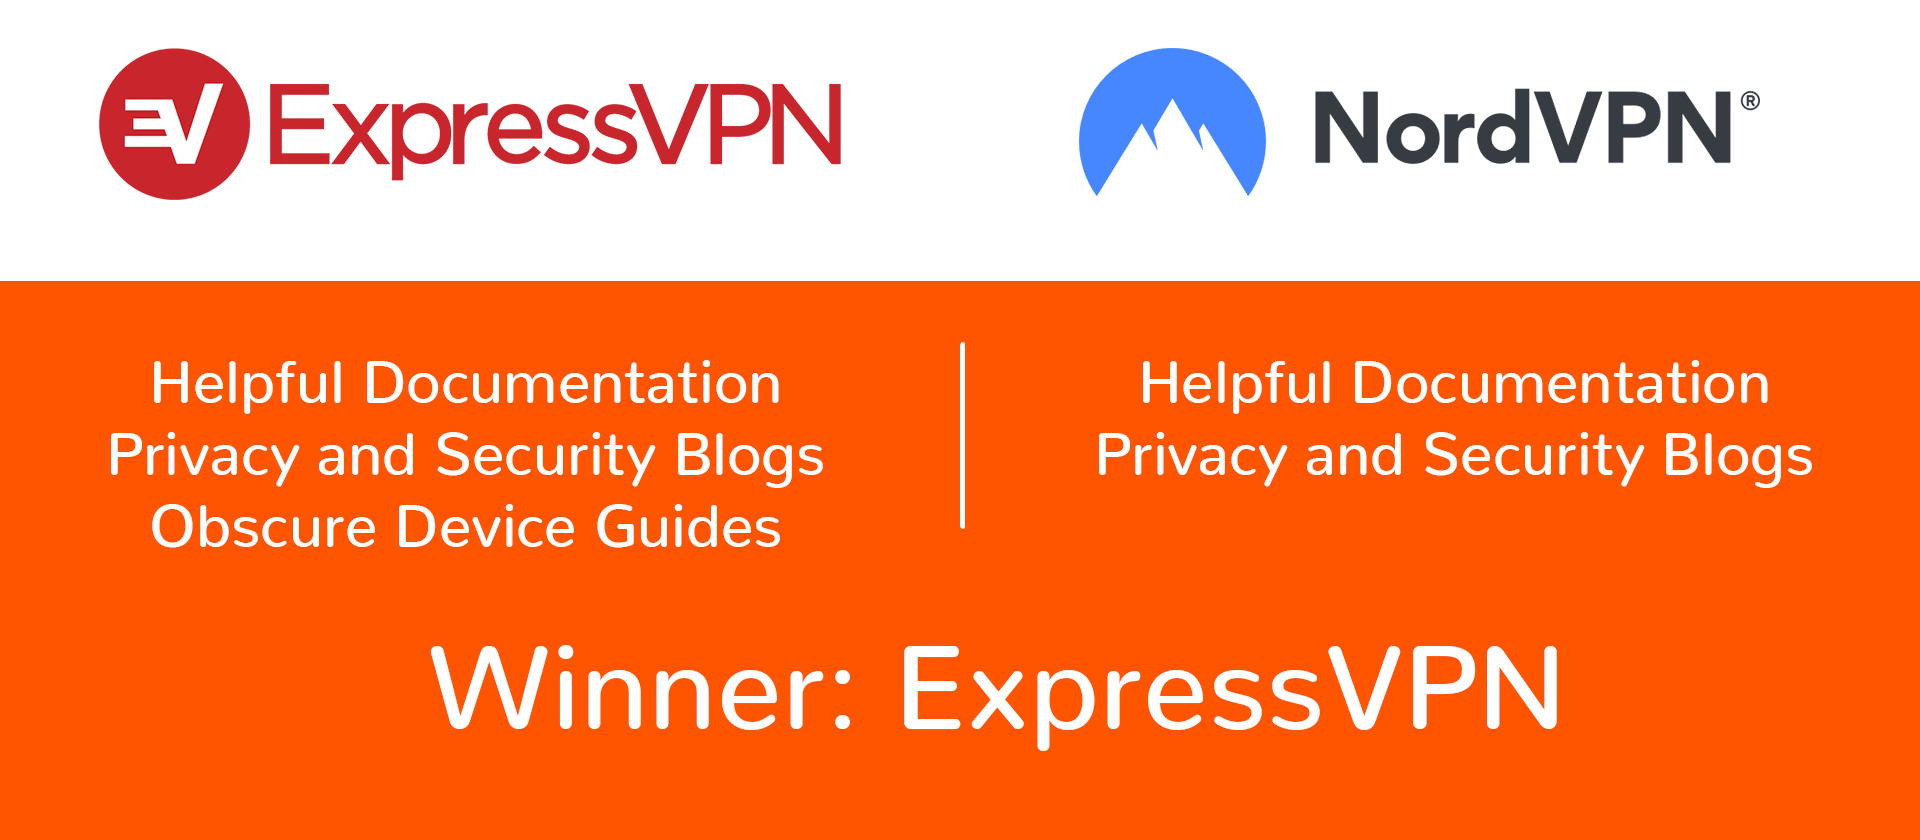 expressvpn vs nordvpn documentation and blogs